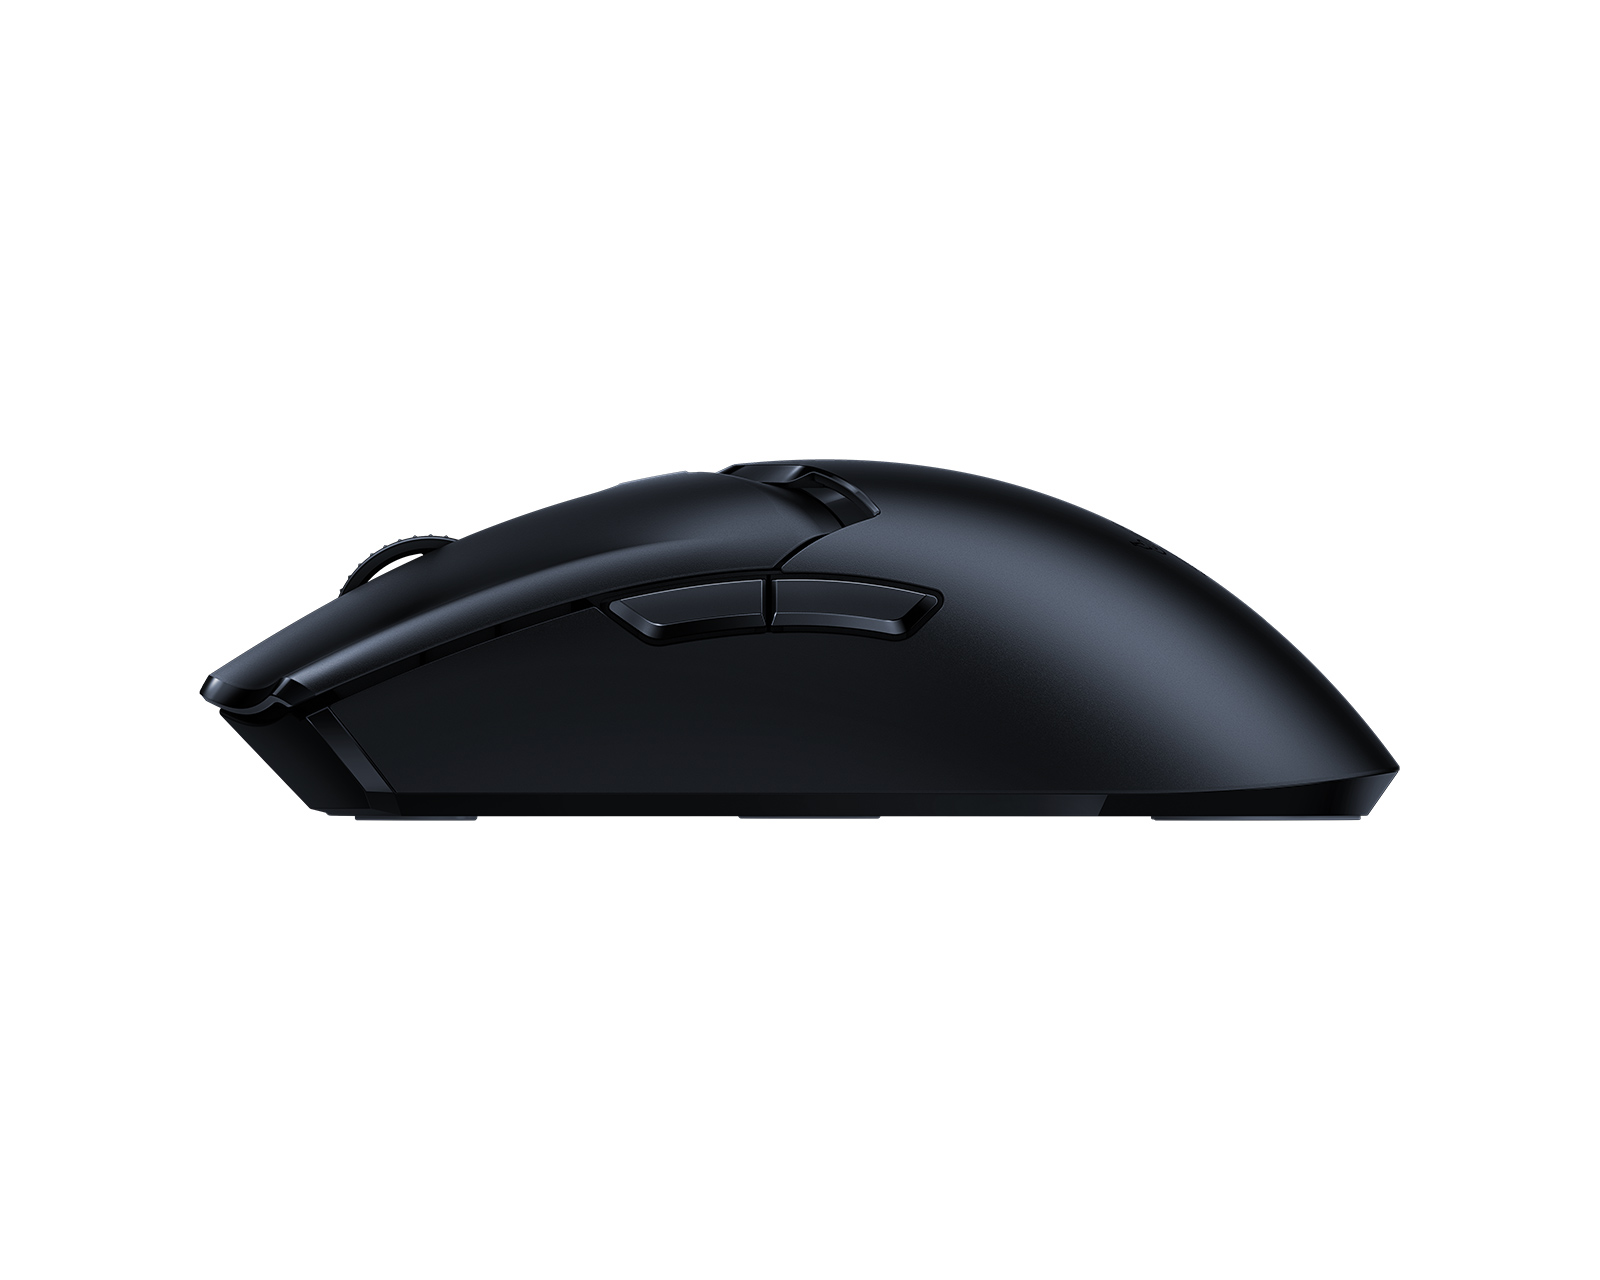 Razer Viper V2 PRO Wireless Gaming Mouse - Black - us.MaxGaming.com